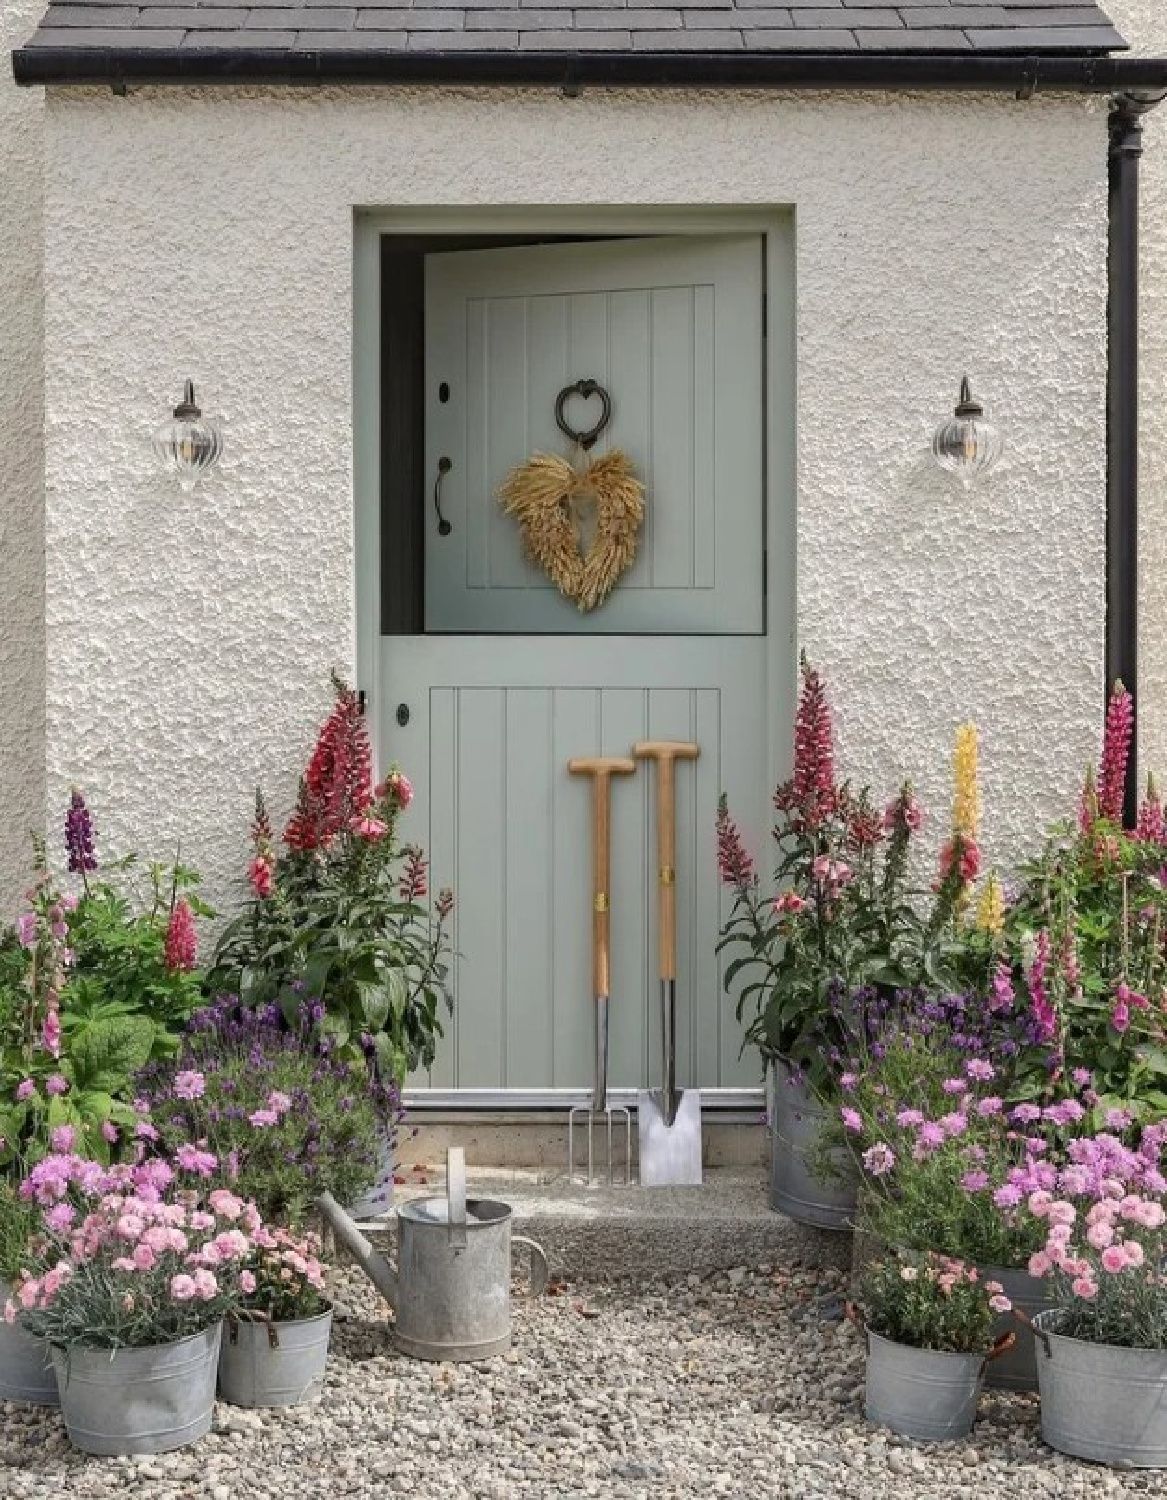 Farrow & Ball Mizzle painted door on a garden shed - @this1870house. #mizzle #farrowandballmizzle